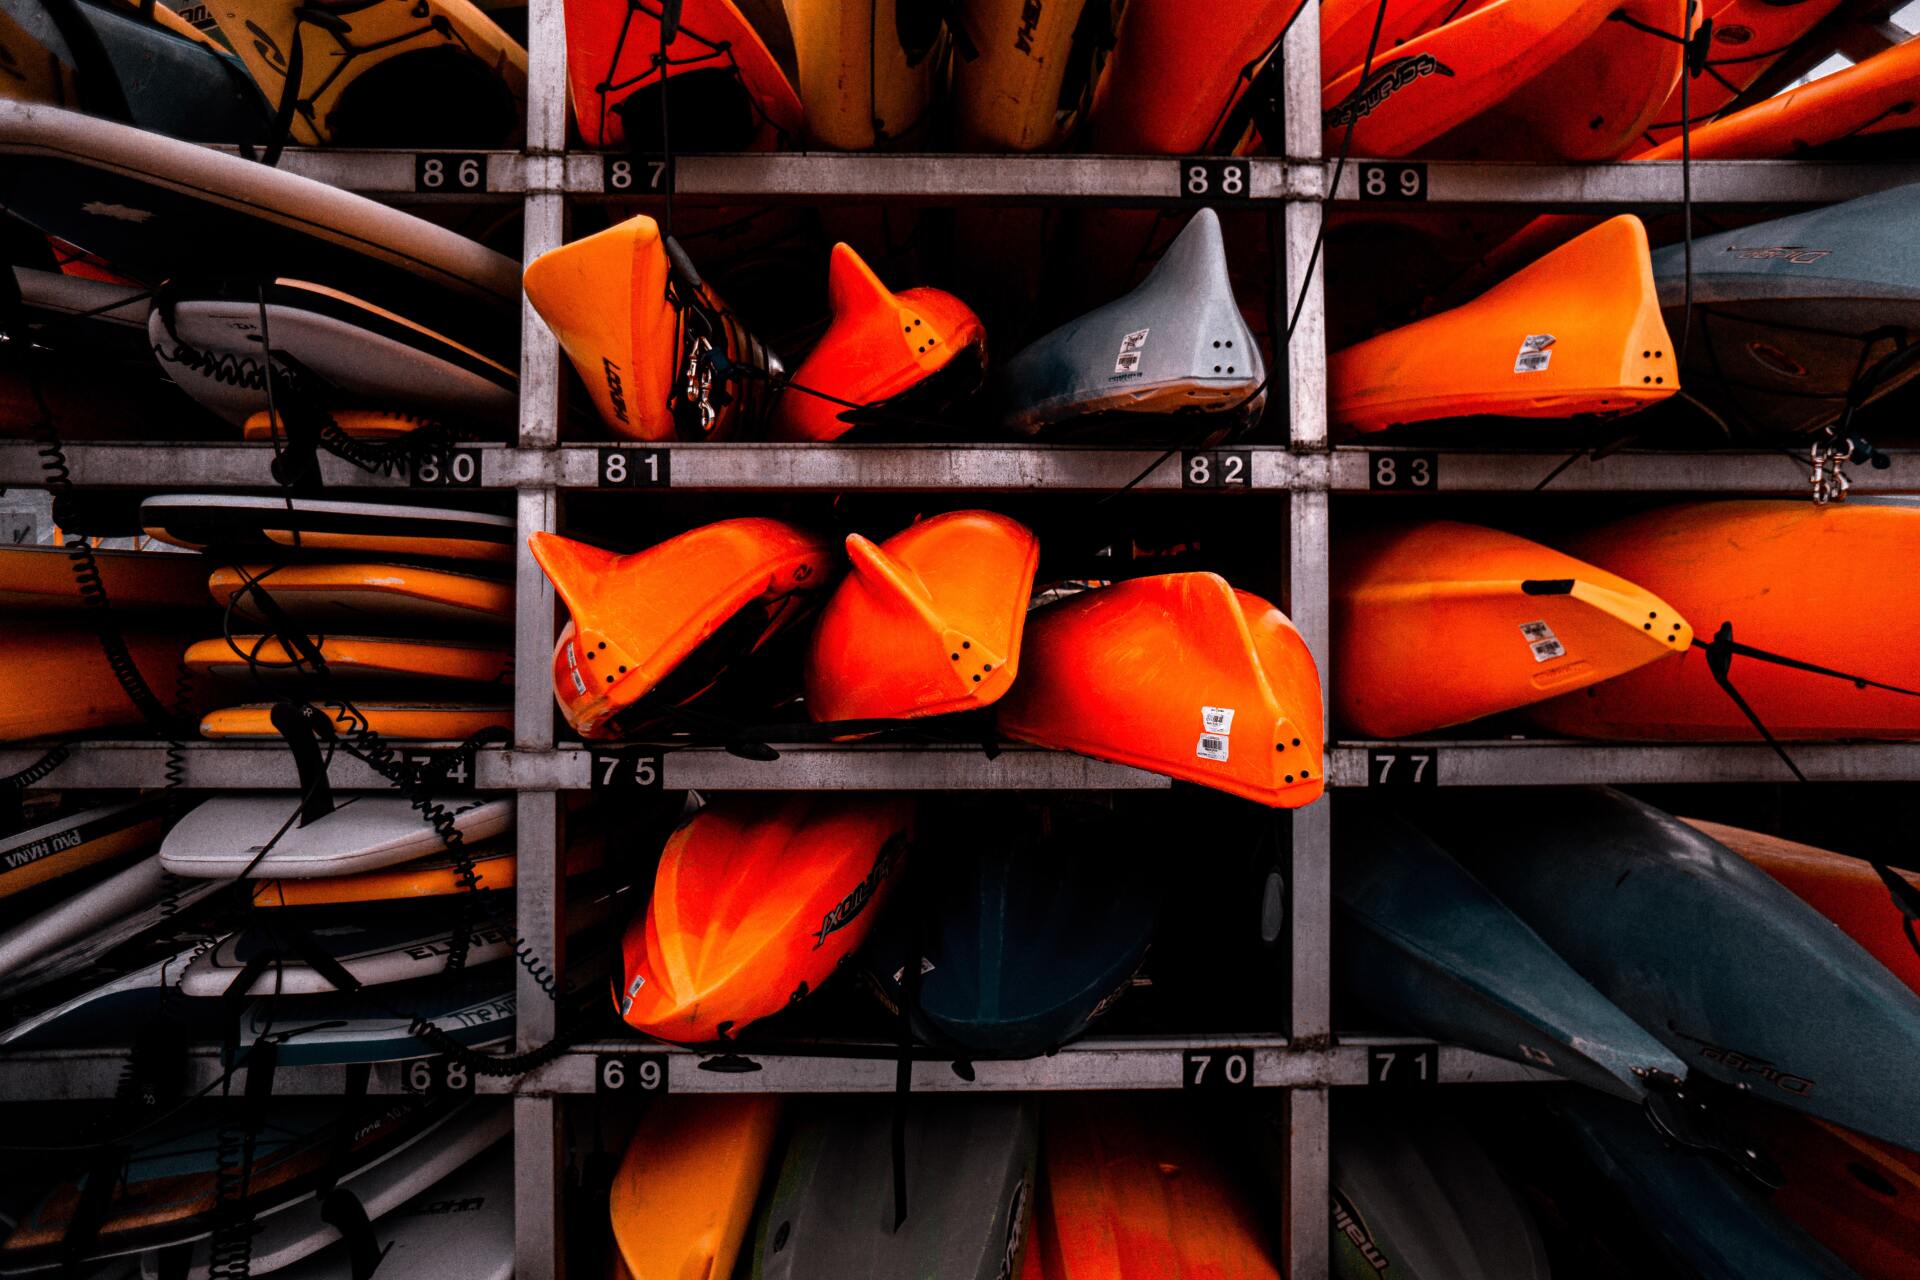 Storage rack with orange kayaks